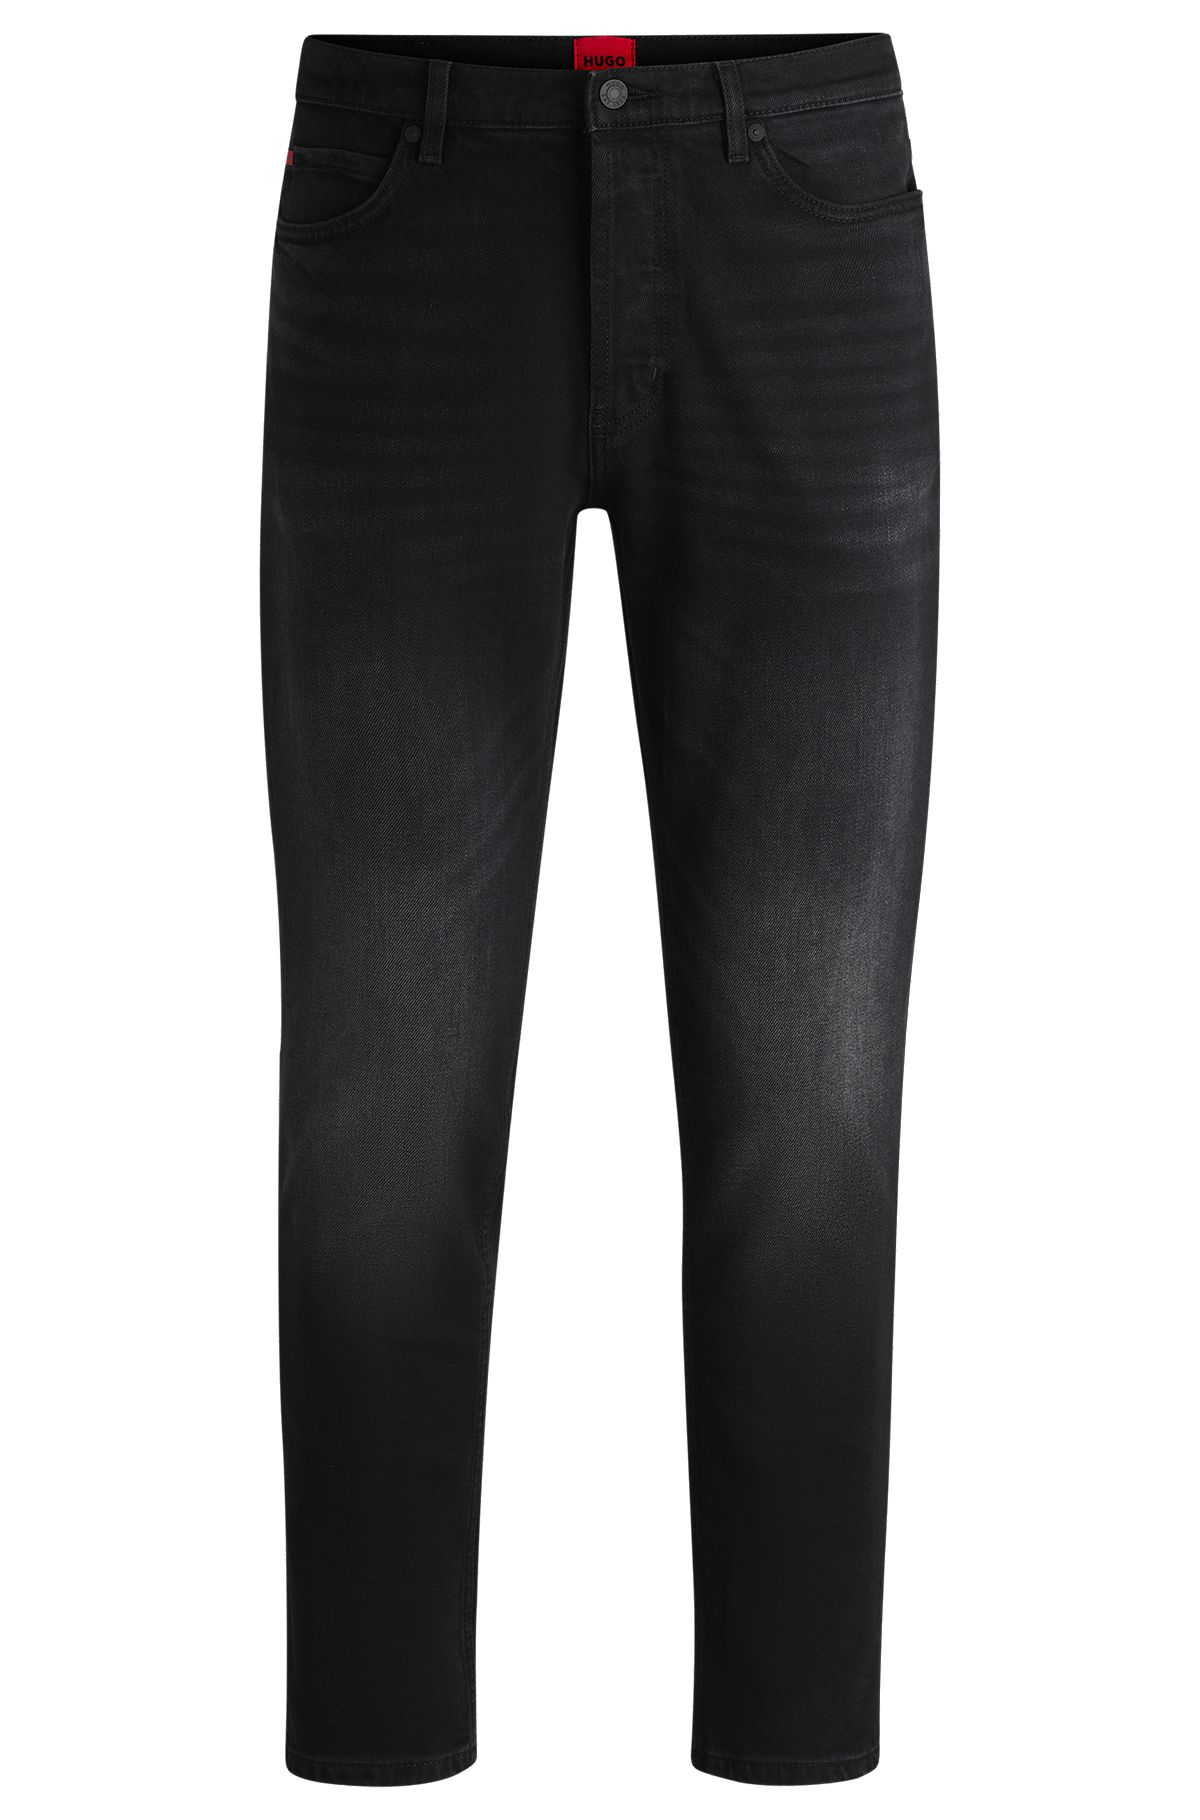 Tapered-fit jeans in black-black stretch denim, Black